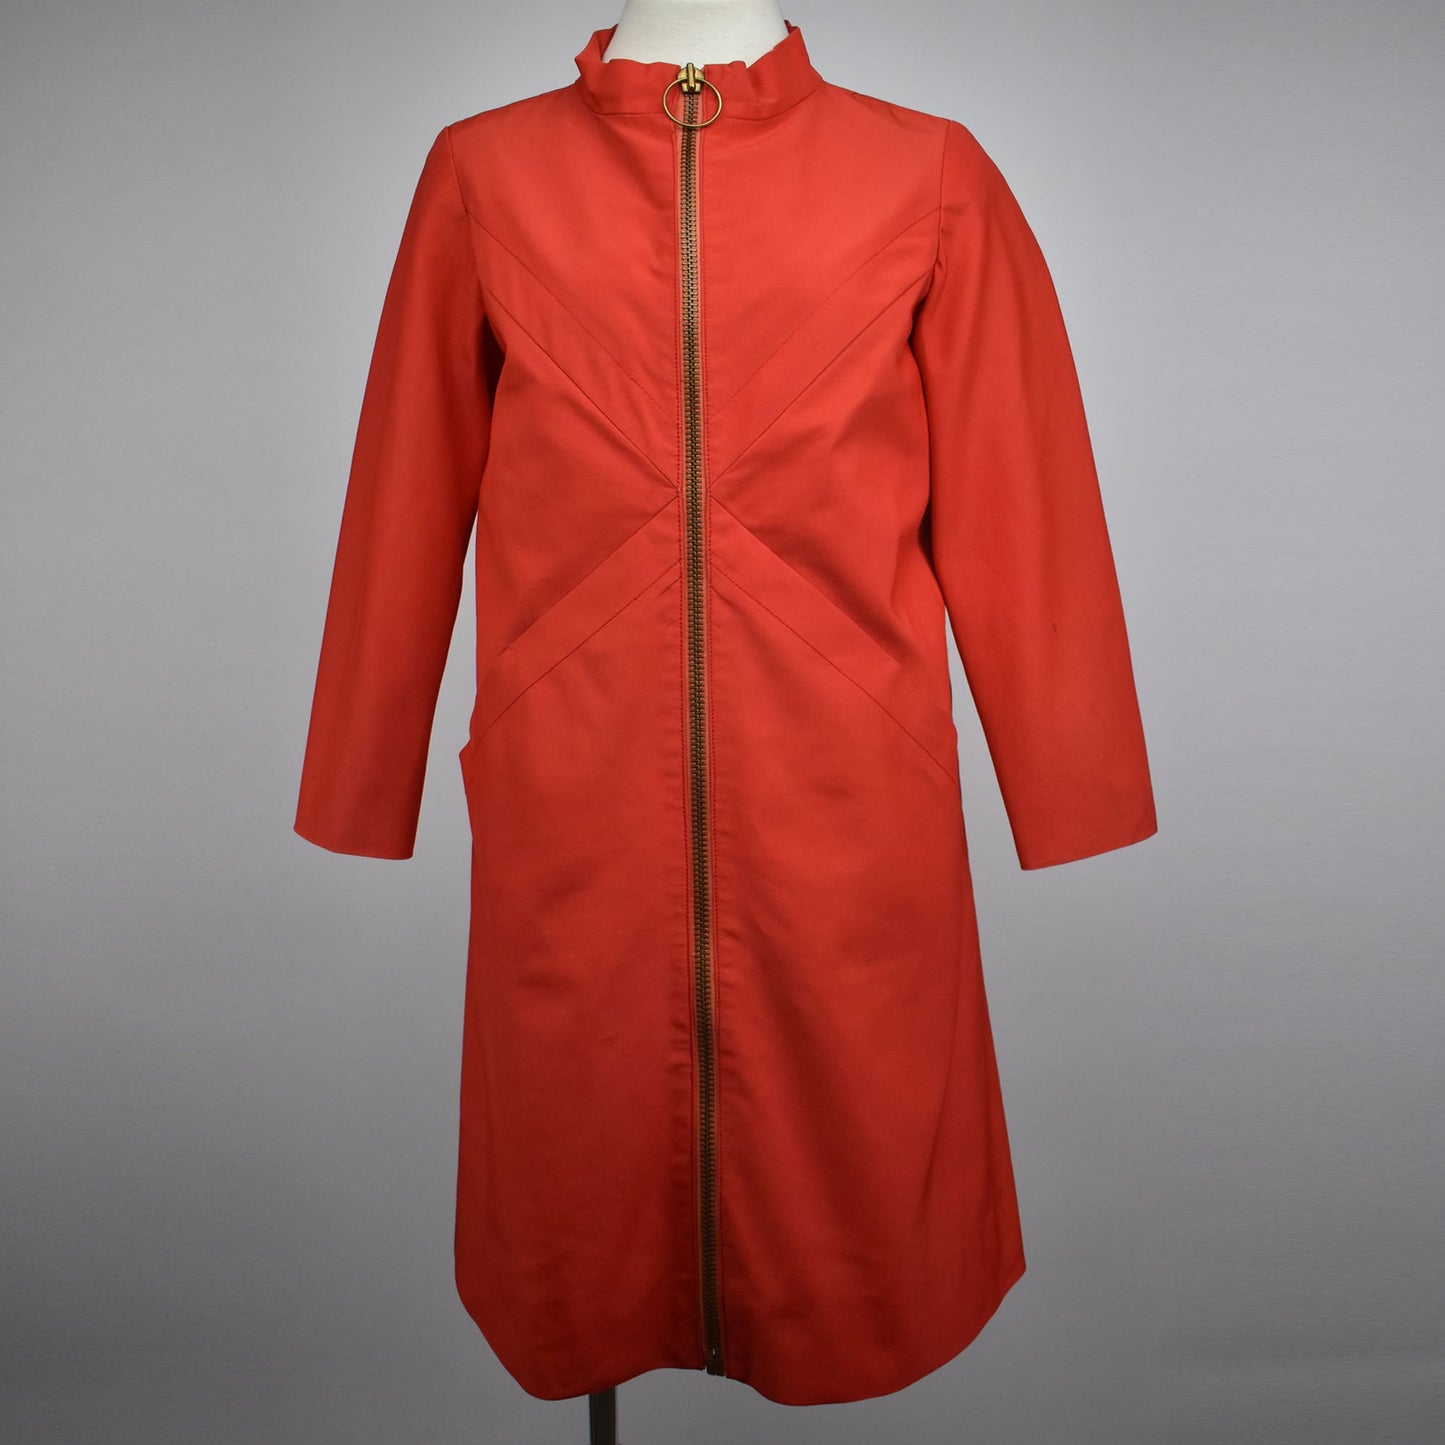 Vintage 60s Creation Pierre Cardin Paris Editions Takashimaya Coat Dress - Mod Trench